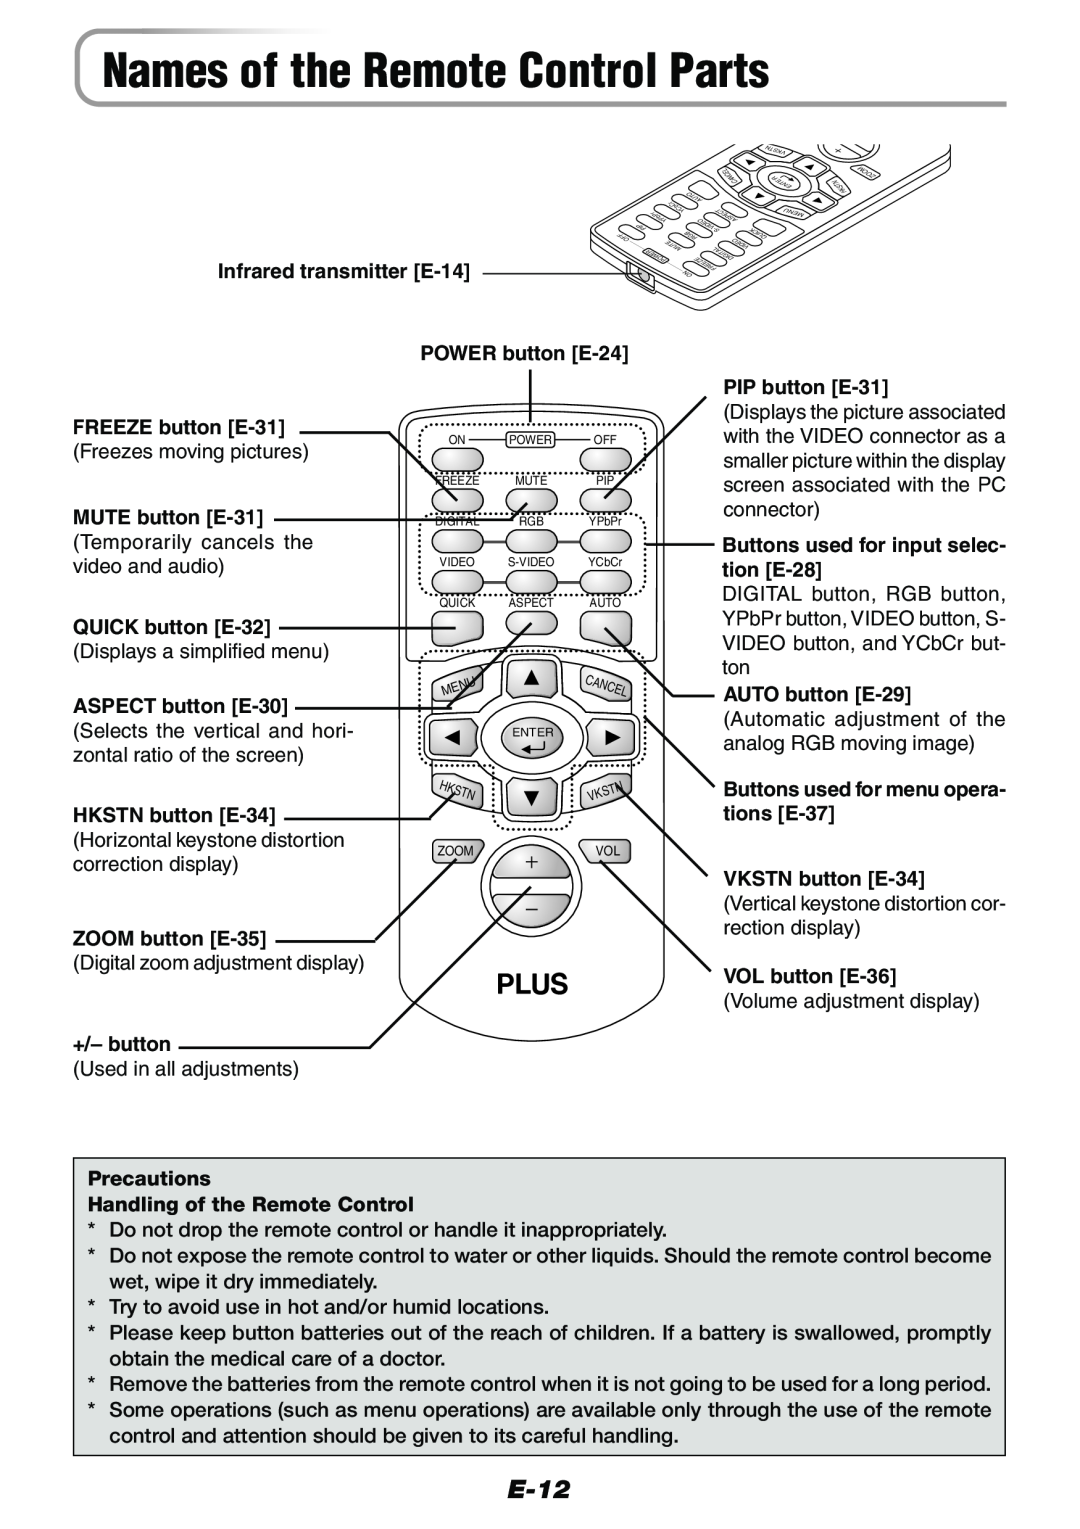 Epson V-1100 E-12, Names of the Remote Control Parts, Infrared transmitter E-14, FREEZE button E-31, MUTE button E-31 